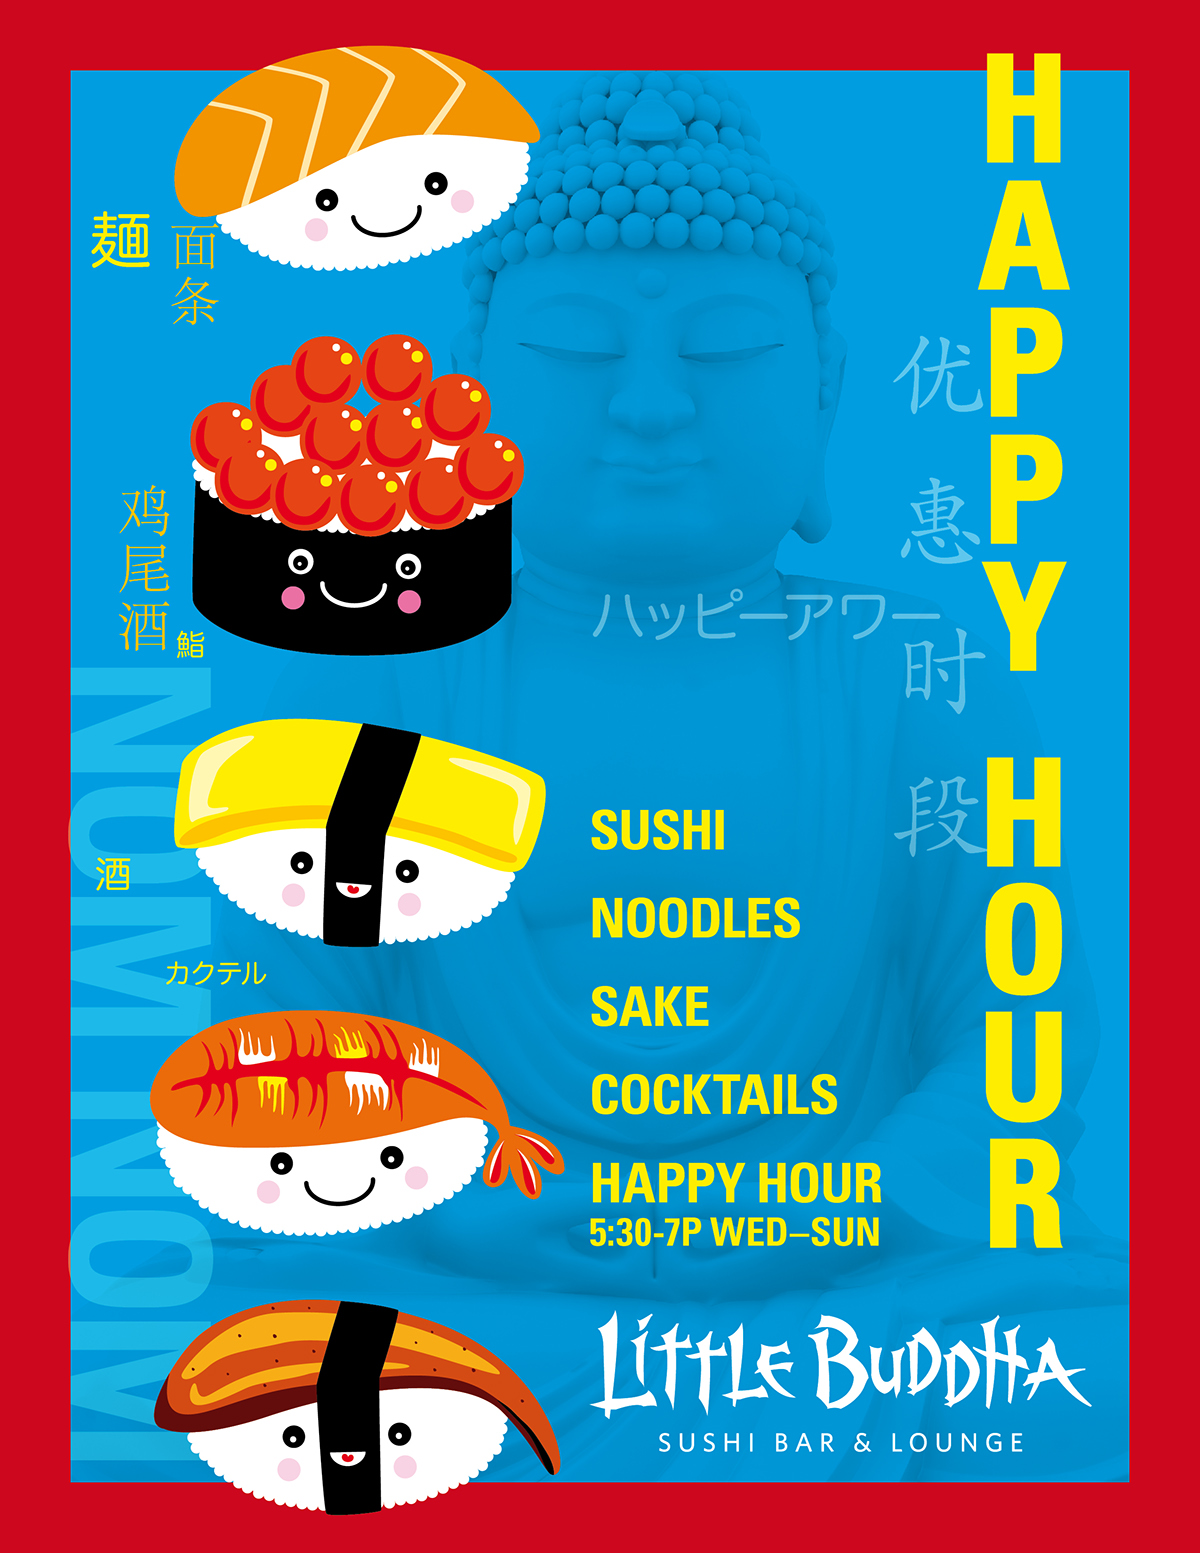 Palms Resort  Little Buddha  ad  Signage  restaurant  FOOD  sushi asian fusion